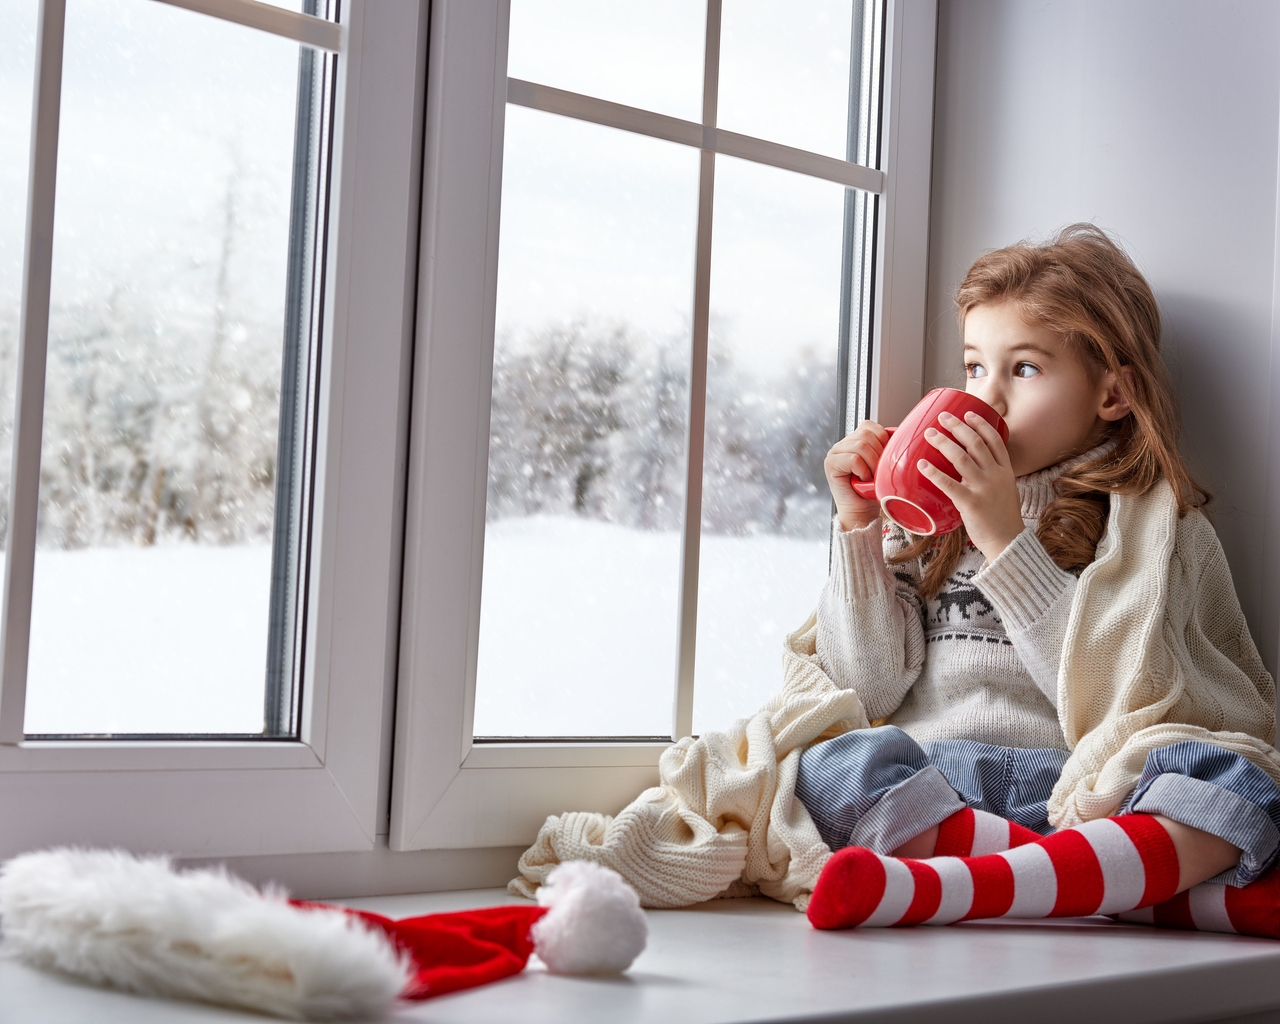 Image: Girl, mug, socks, hat, plaid, winter, window, sill